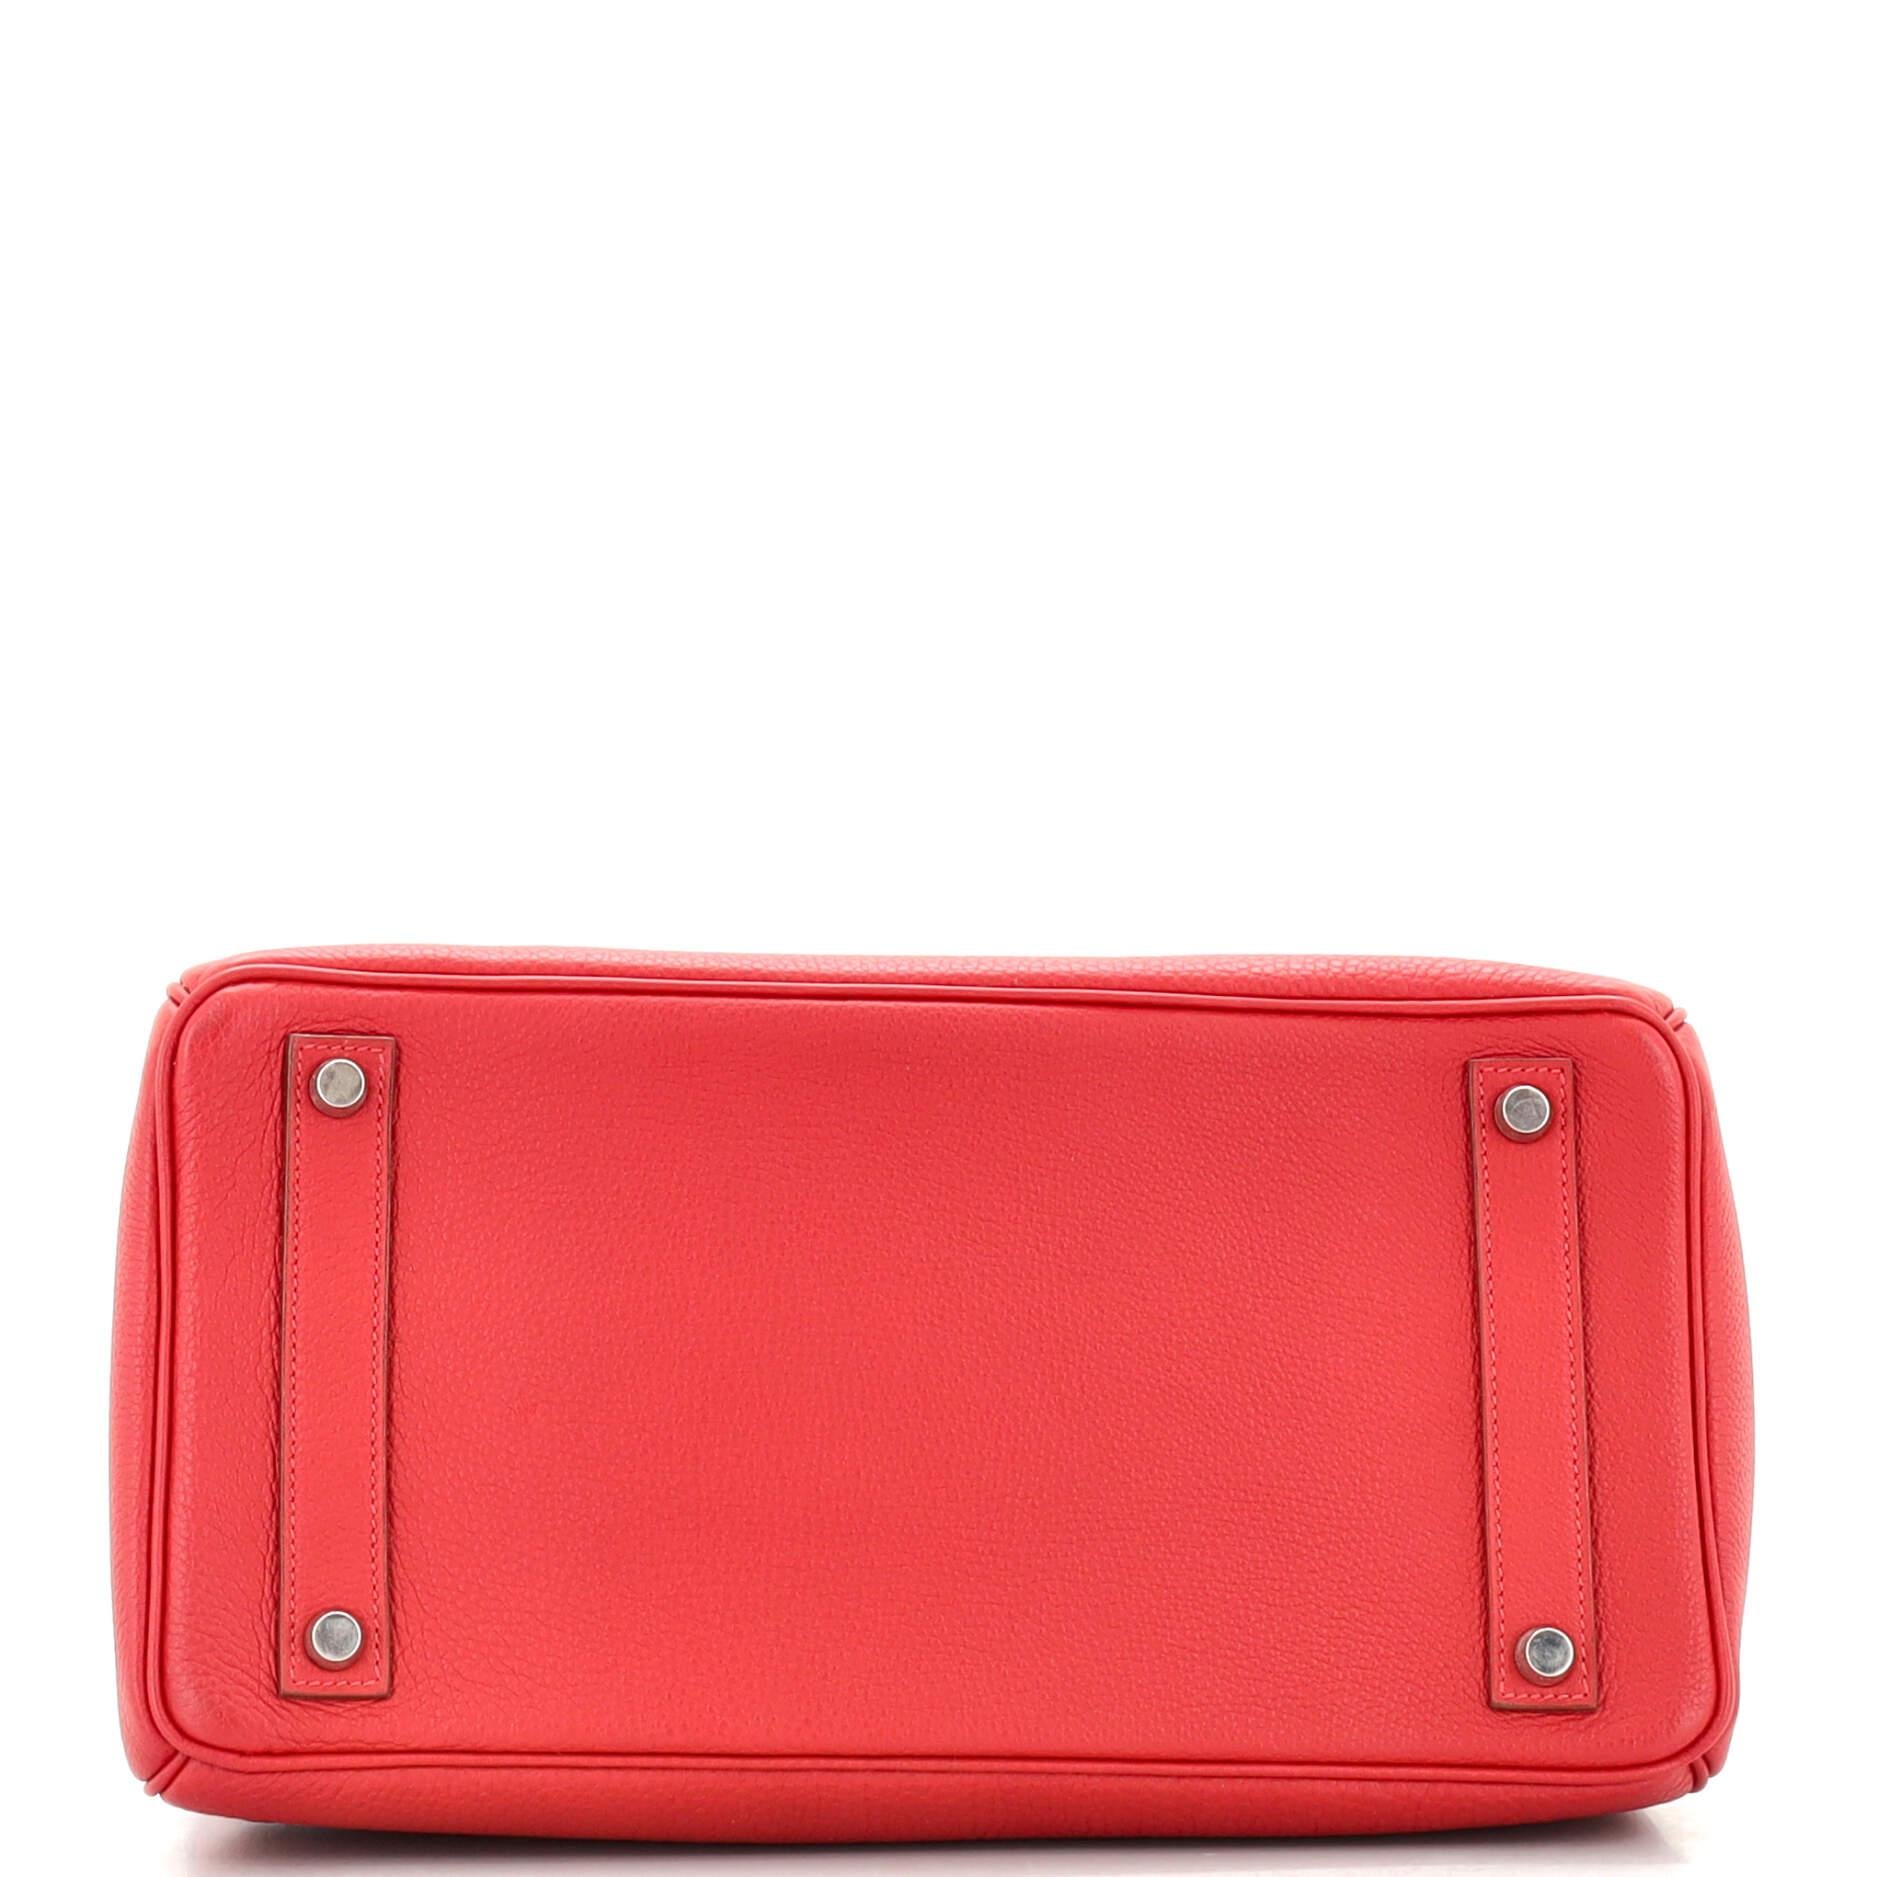 Red Hermes HAC Birkin Bag Rouge Garance Togo with Palladium Hardware 32